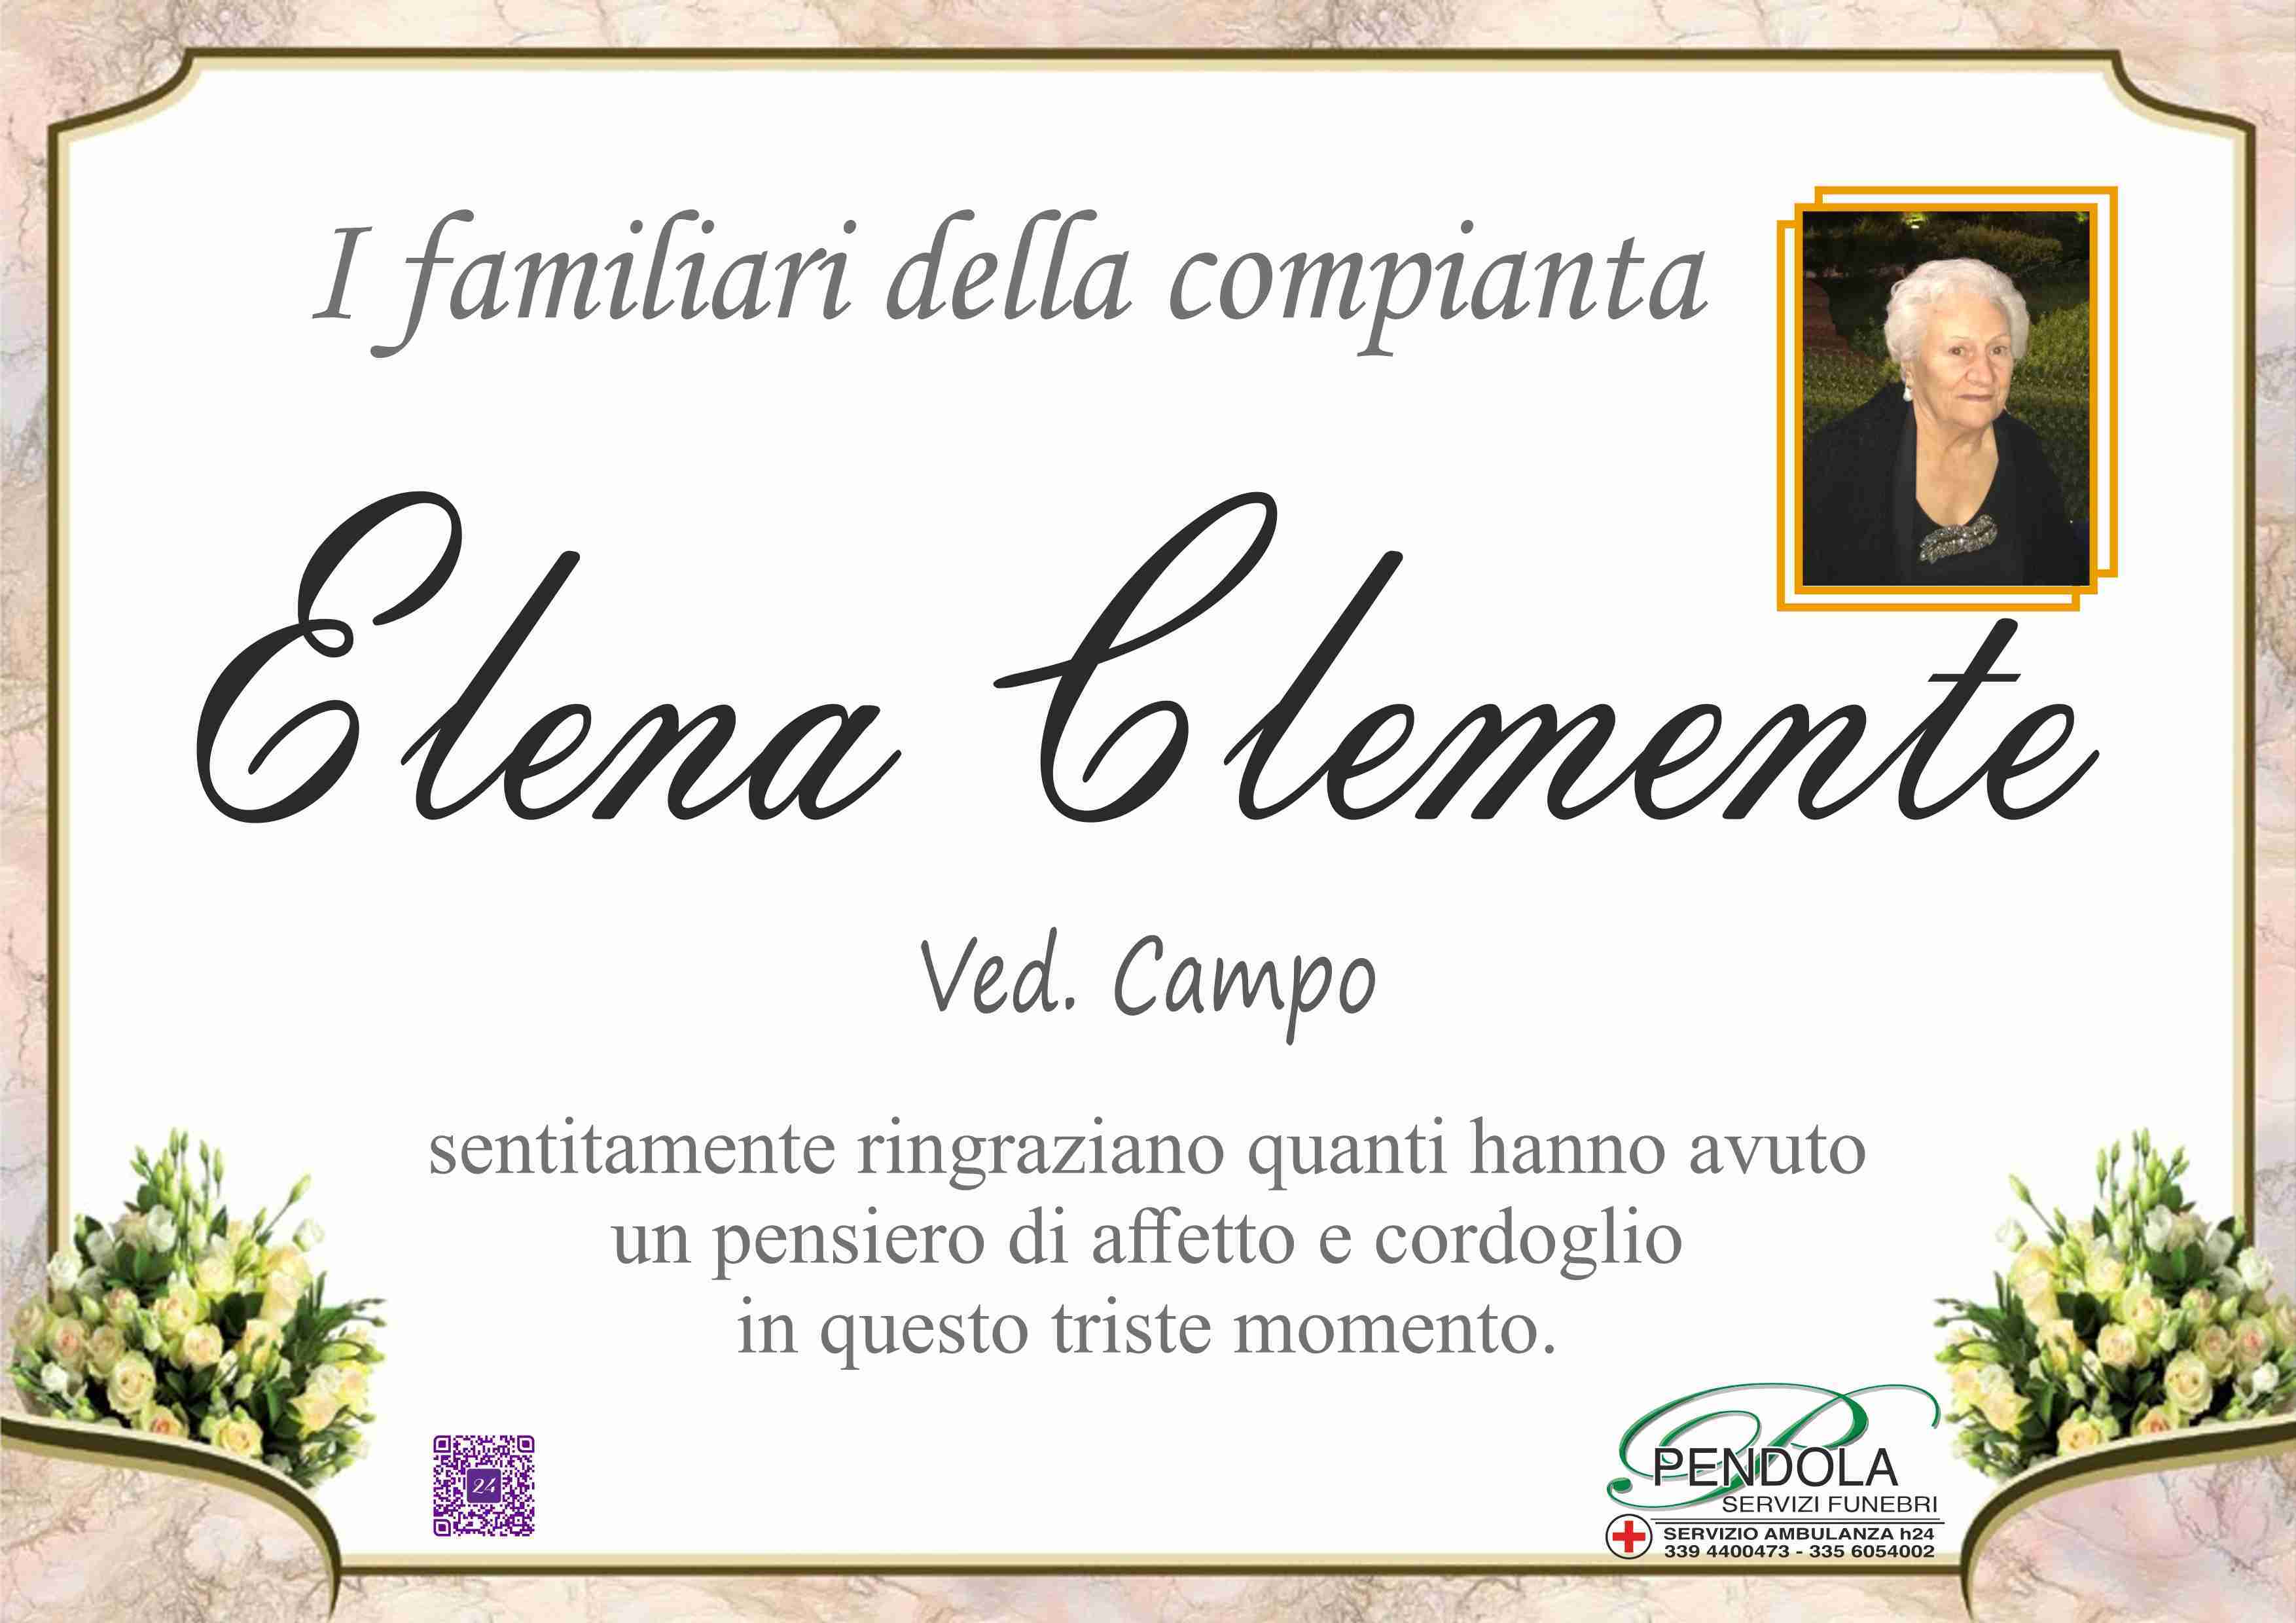 Elena Clemente